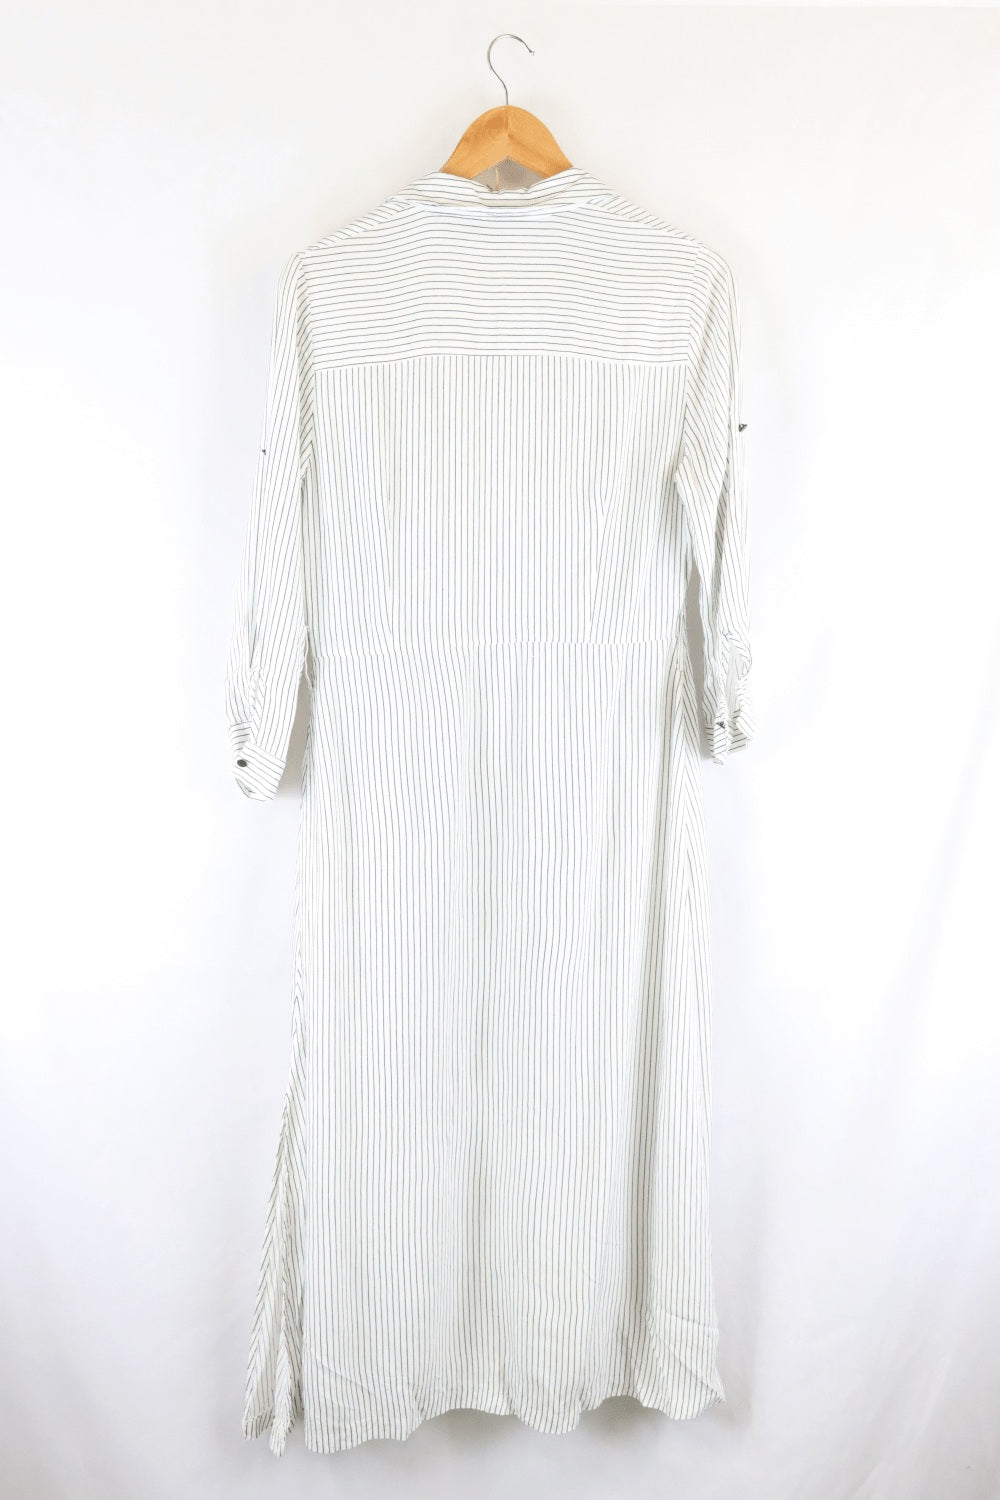 Zara Black And White Striped Dress L